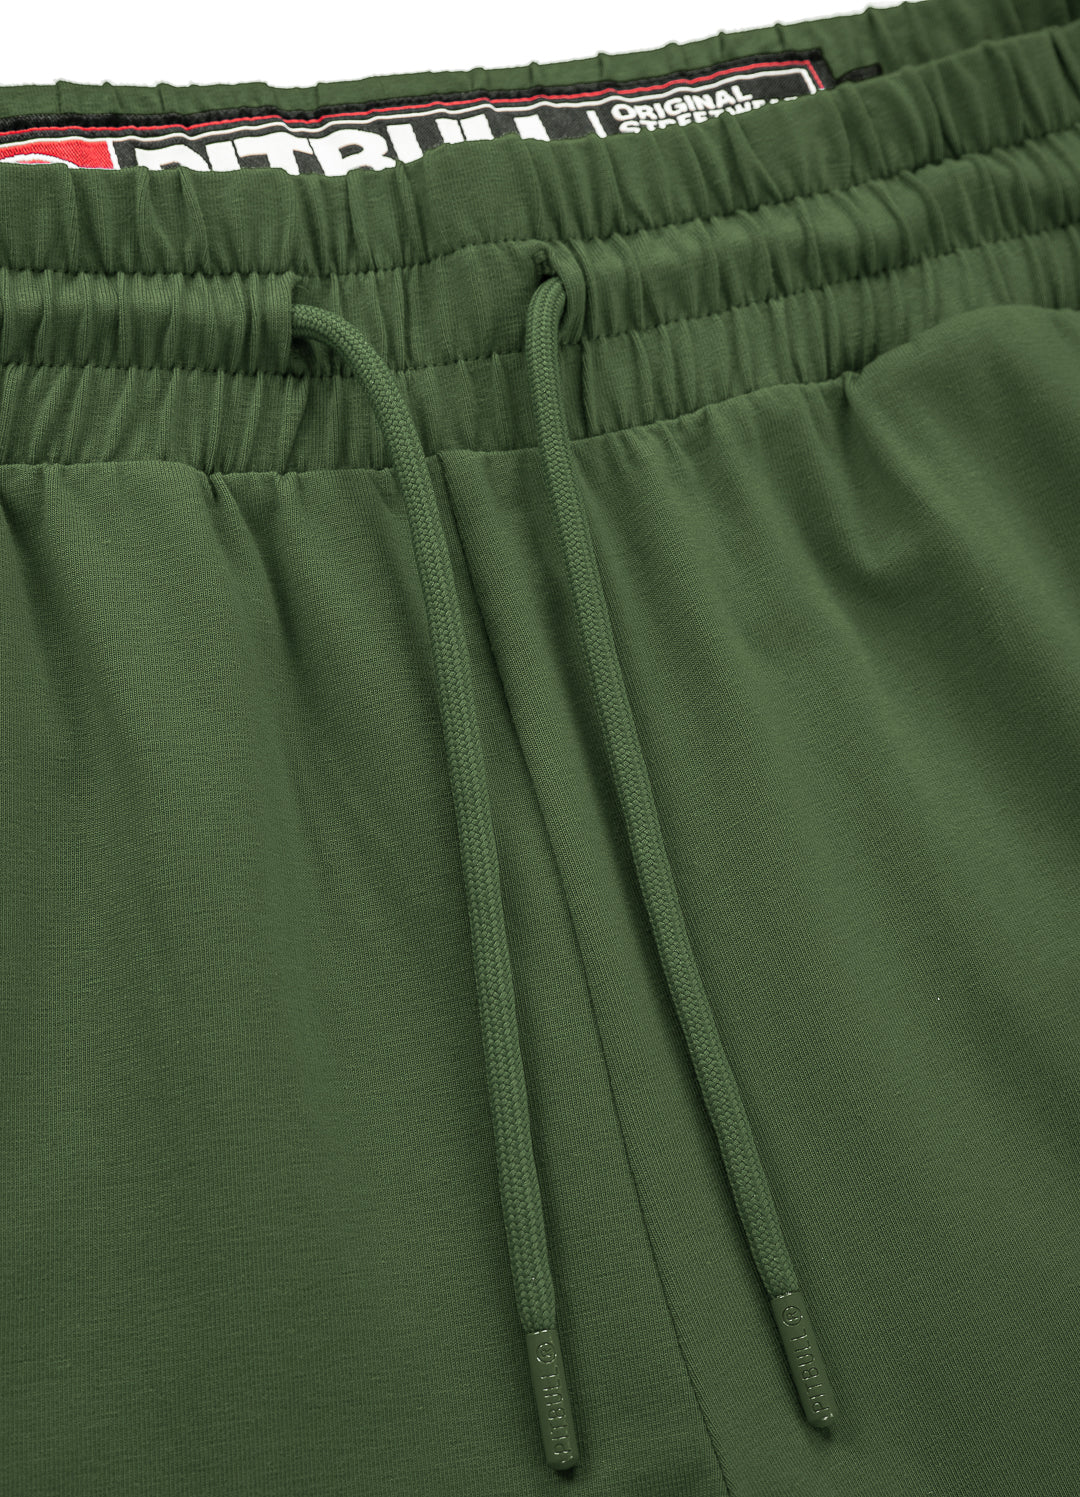 DURANGO Spandex Olive Shorts.